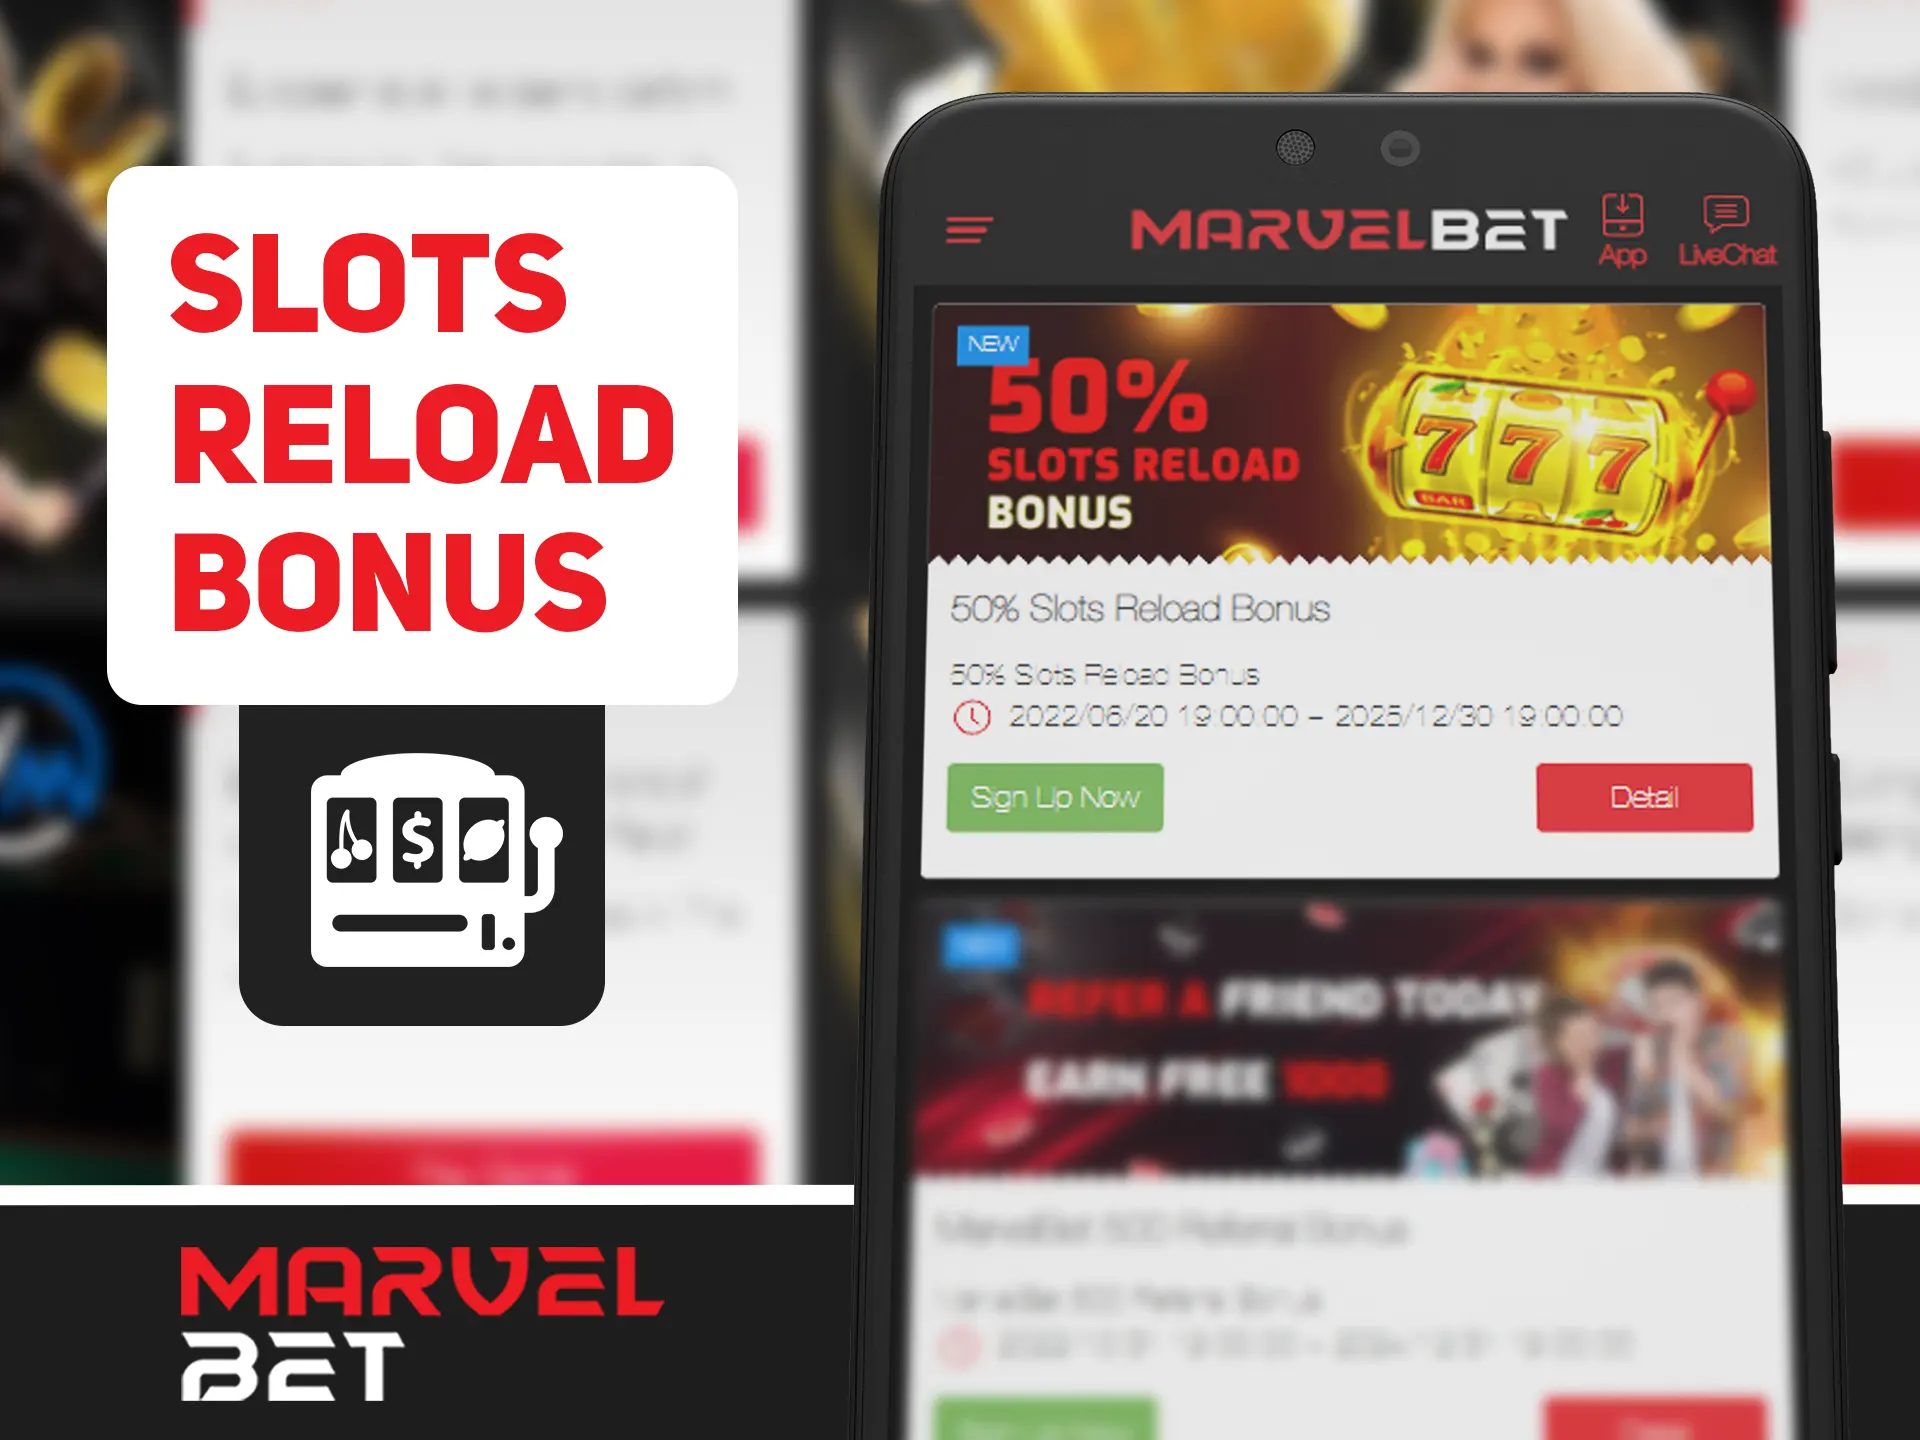 Spin slots at Marvelbet casino and get bonus.